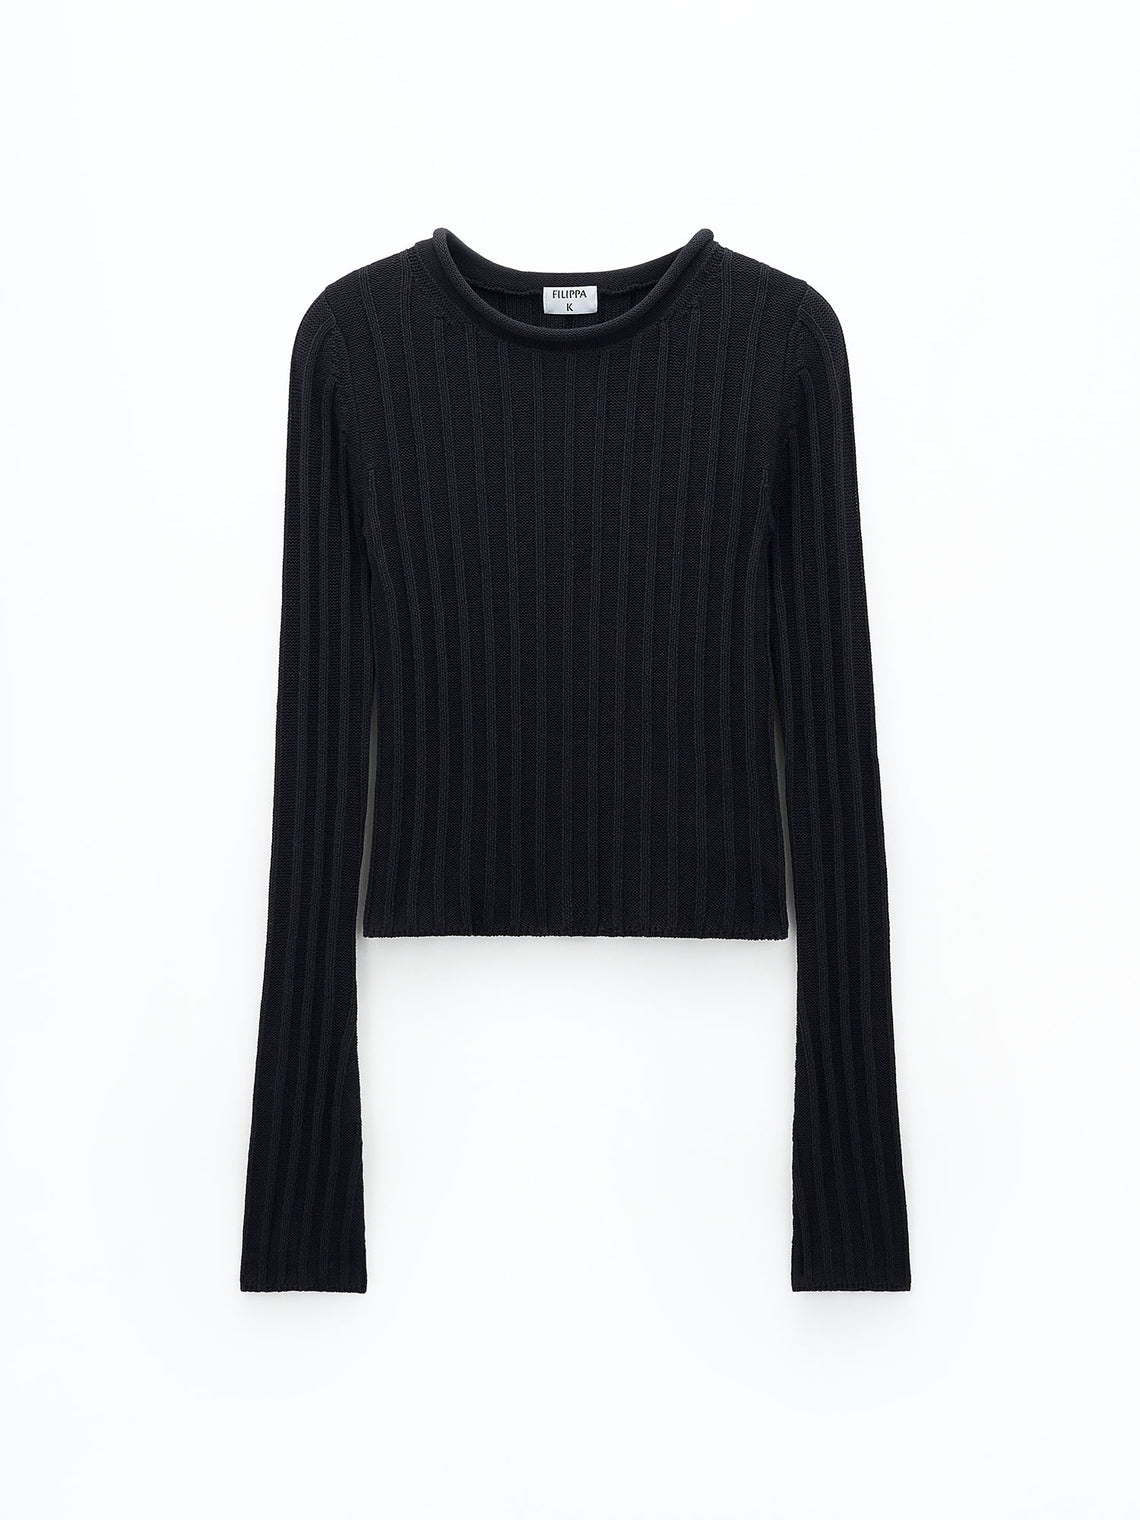 Cotton rib sweater by Filippa K - black